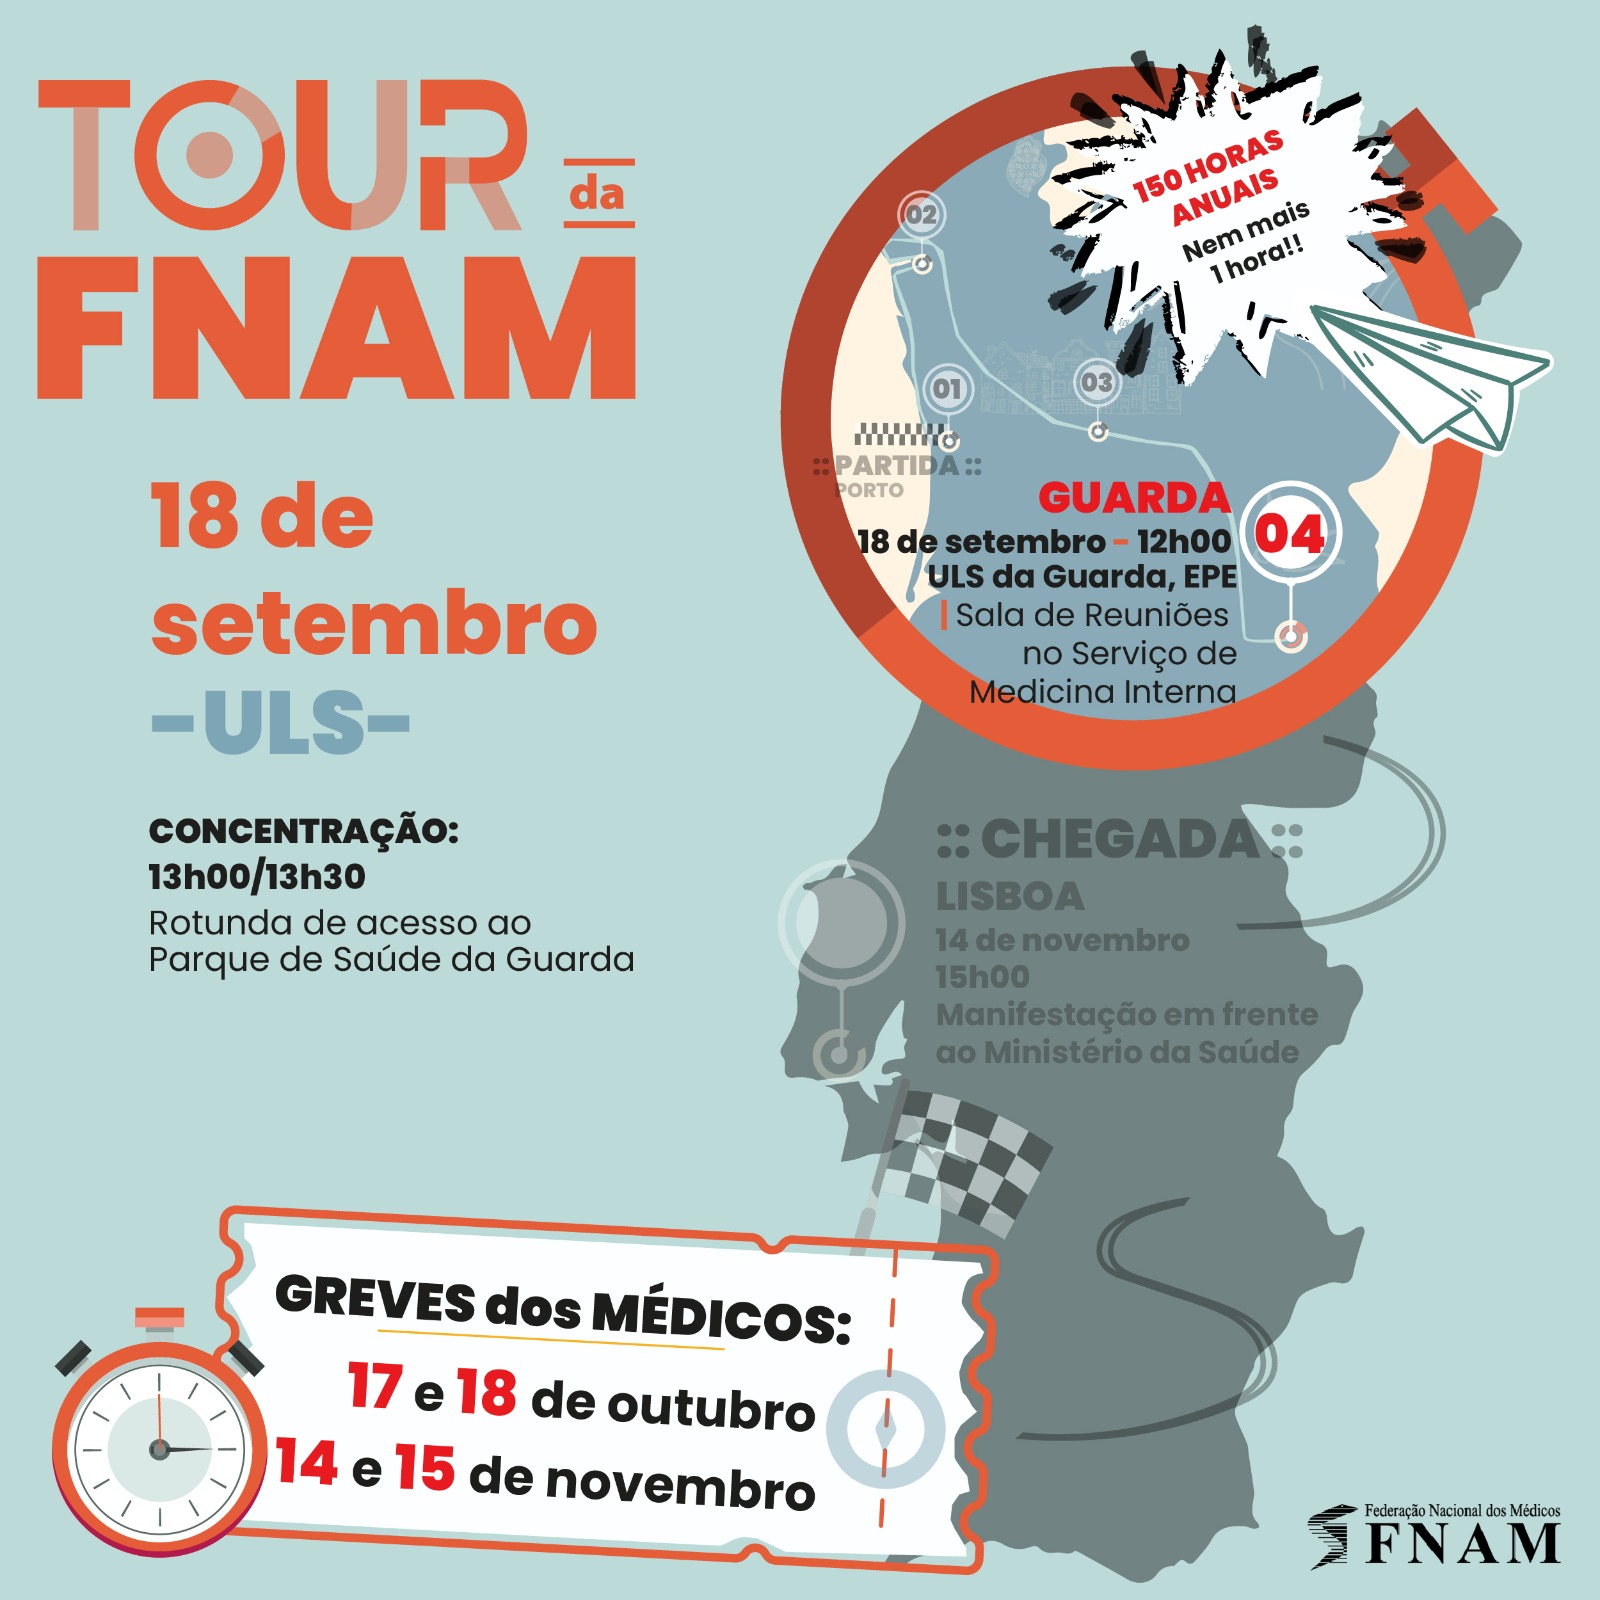 4ª Etapa do Tour da FNAM - 18 de setembro | ULS Guarda